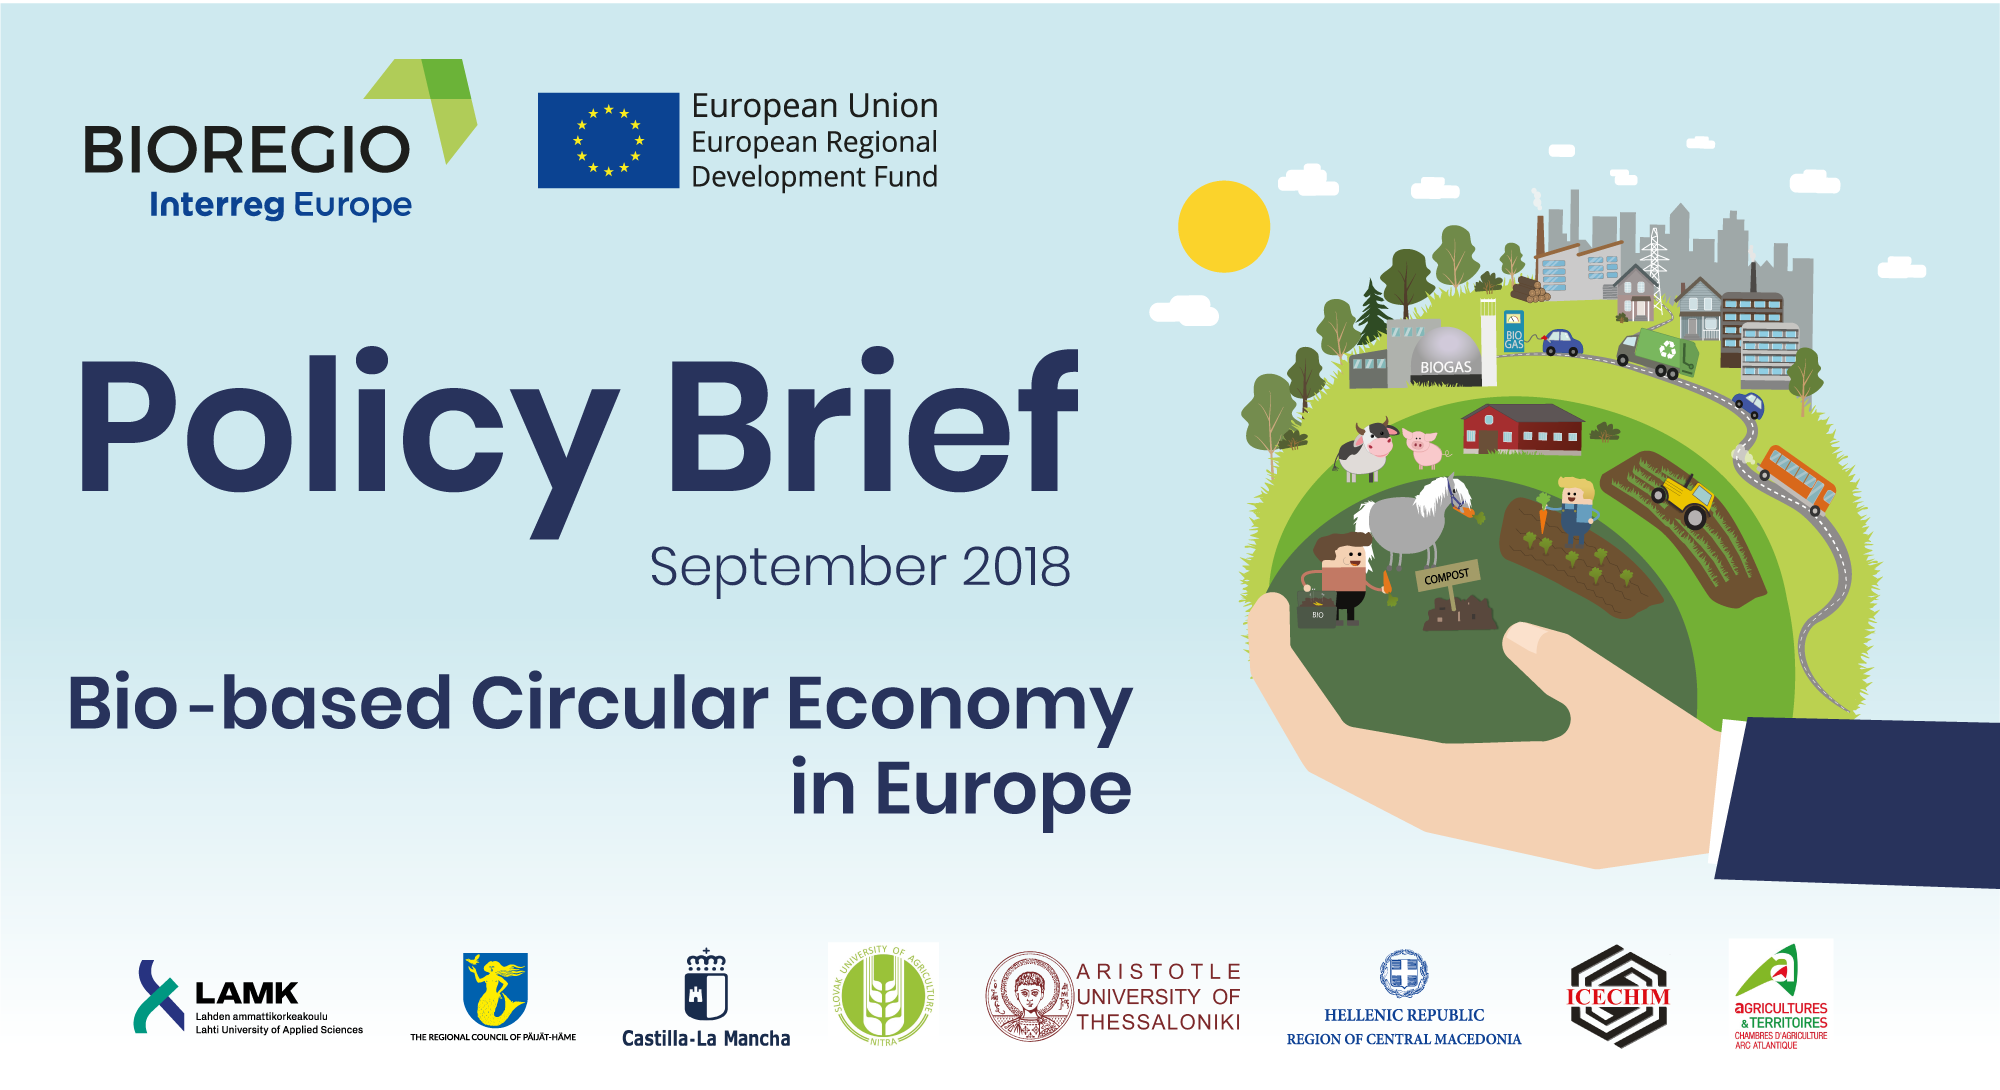 Policy Brief on bio-based circular economy